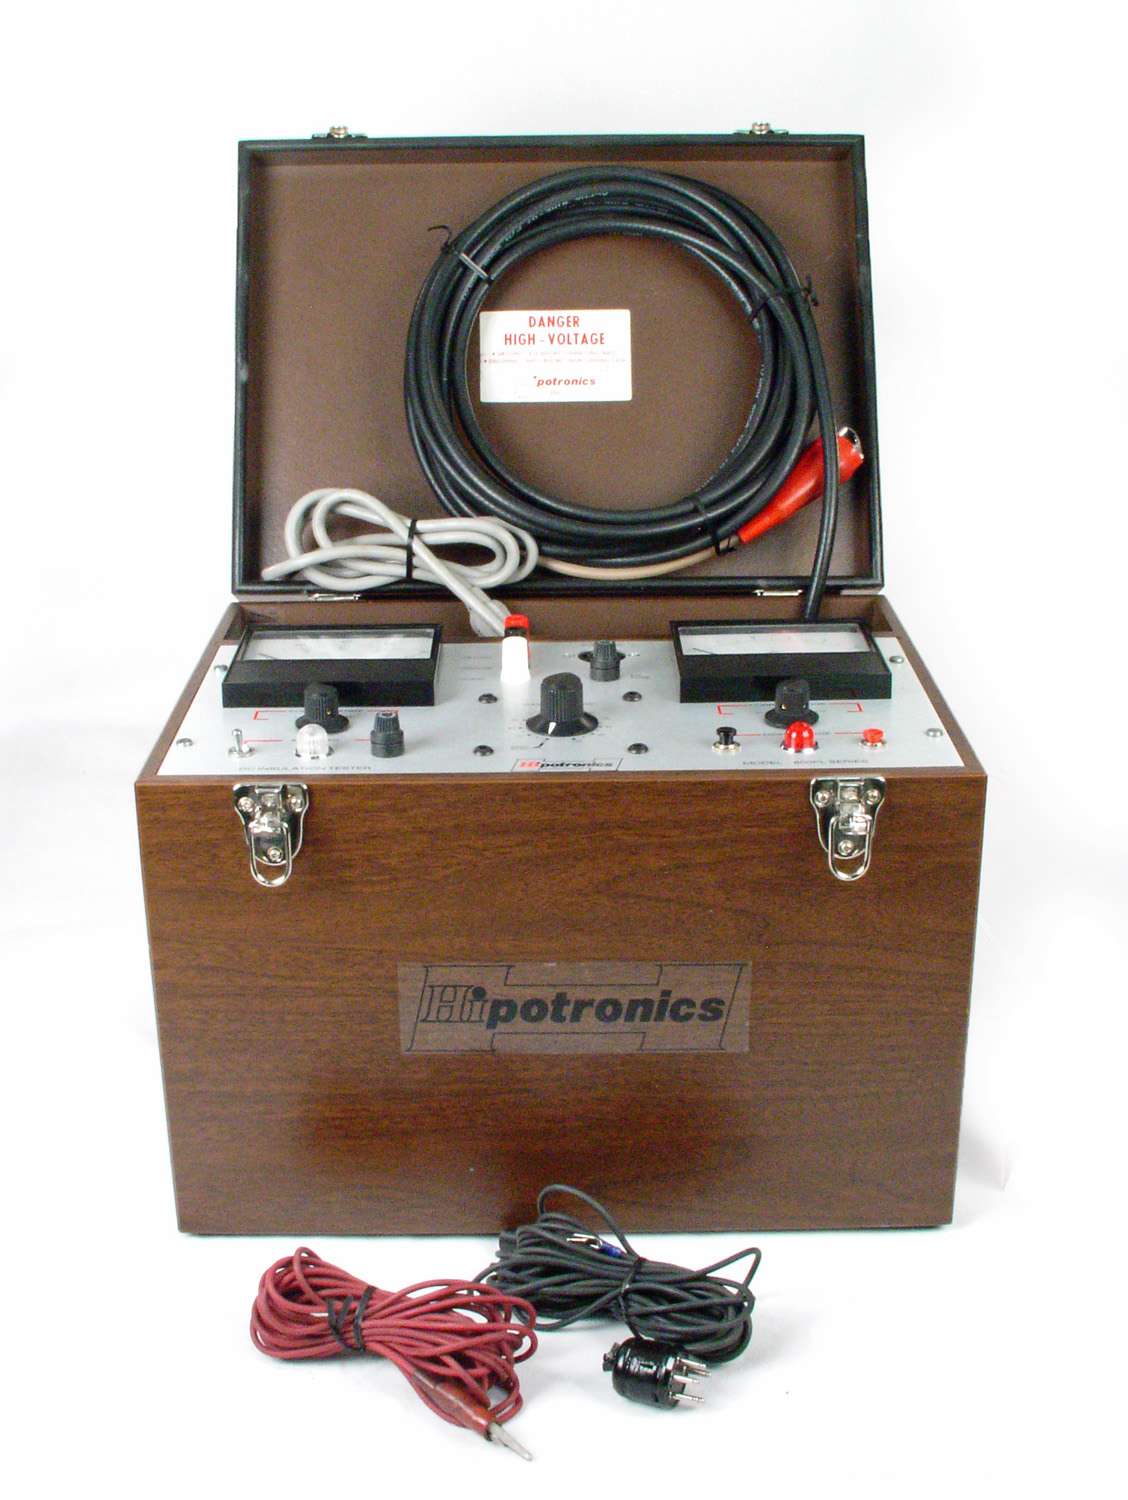 Similar product is Hipotronics 880PL-10mA